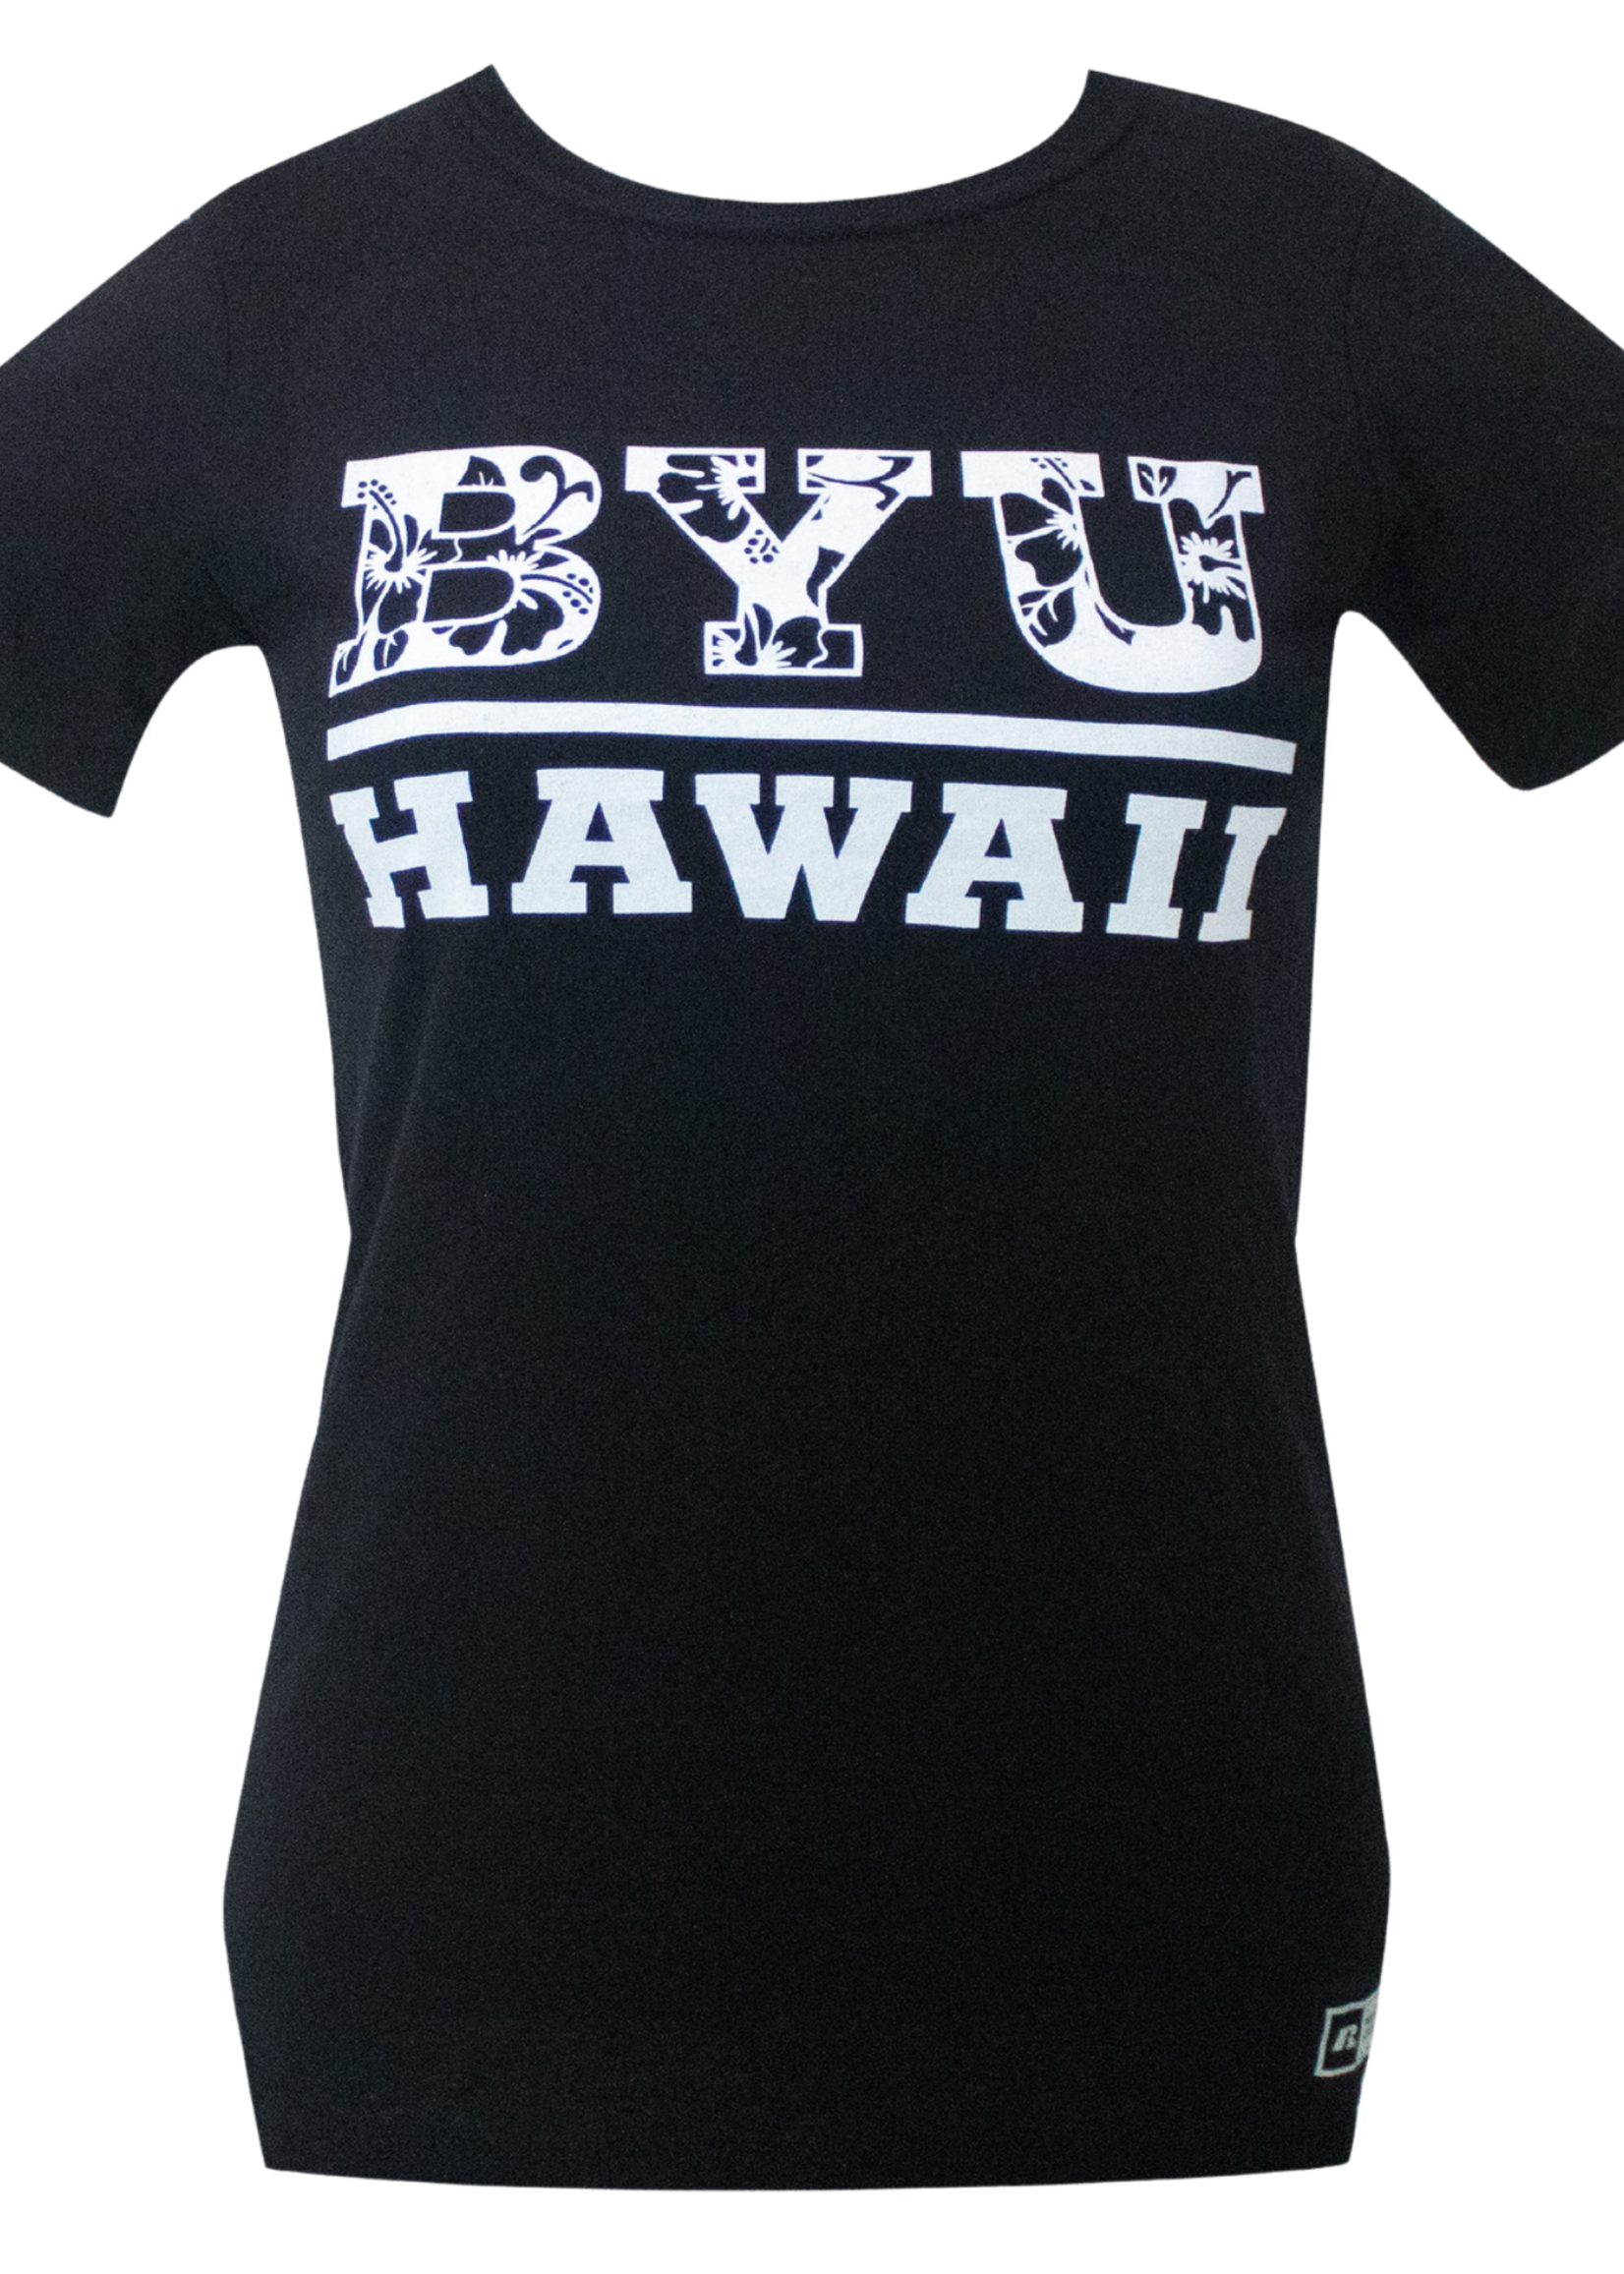 BYU-Hawaii Hibiscus Women's Tee -